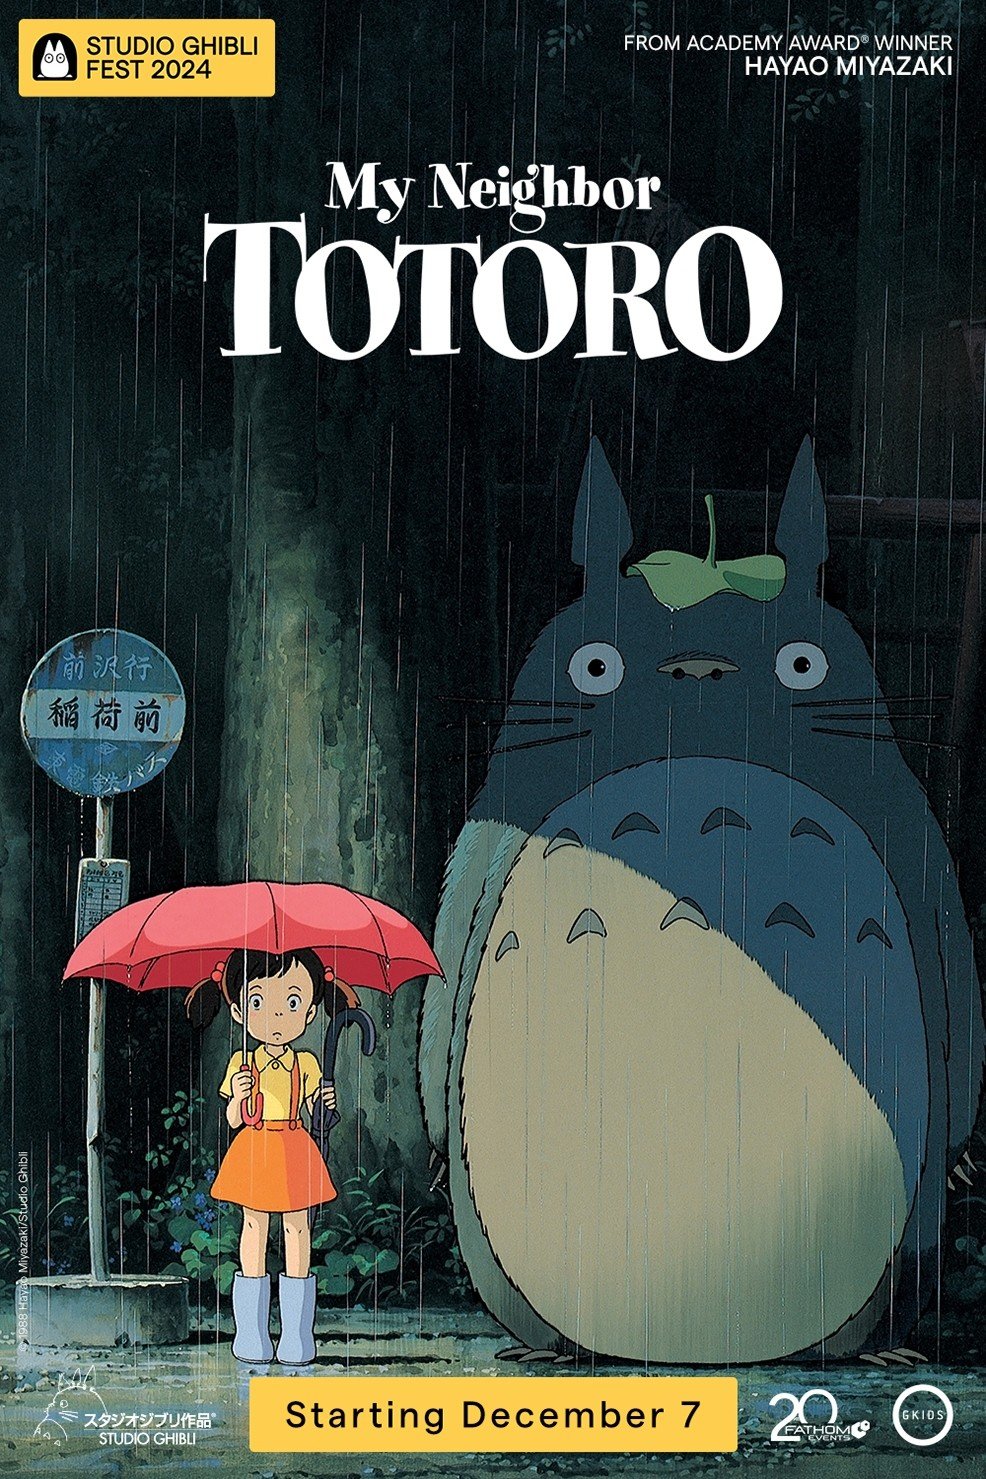 My Neighbor Totoro - Studio Ghibli Fest 2024